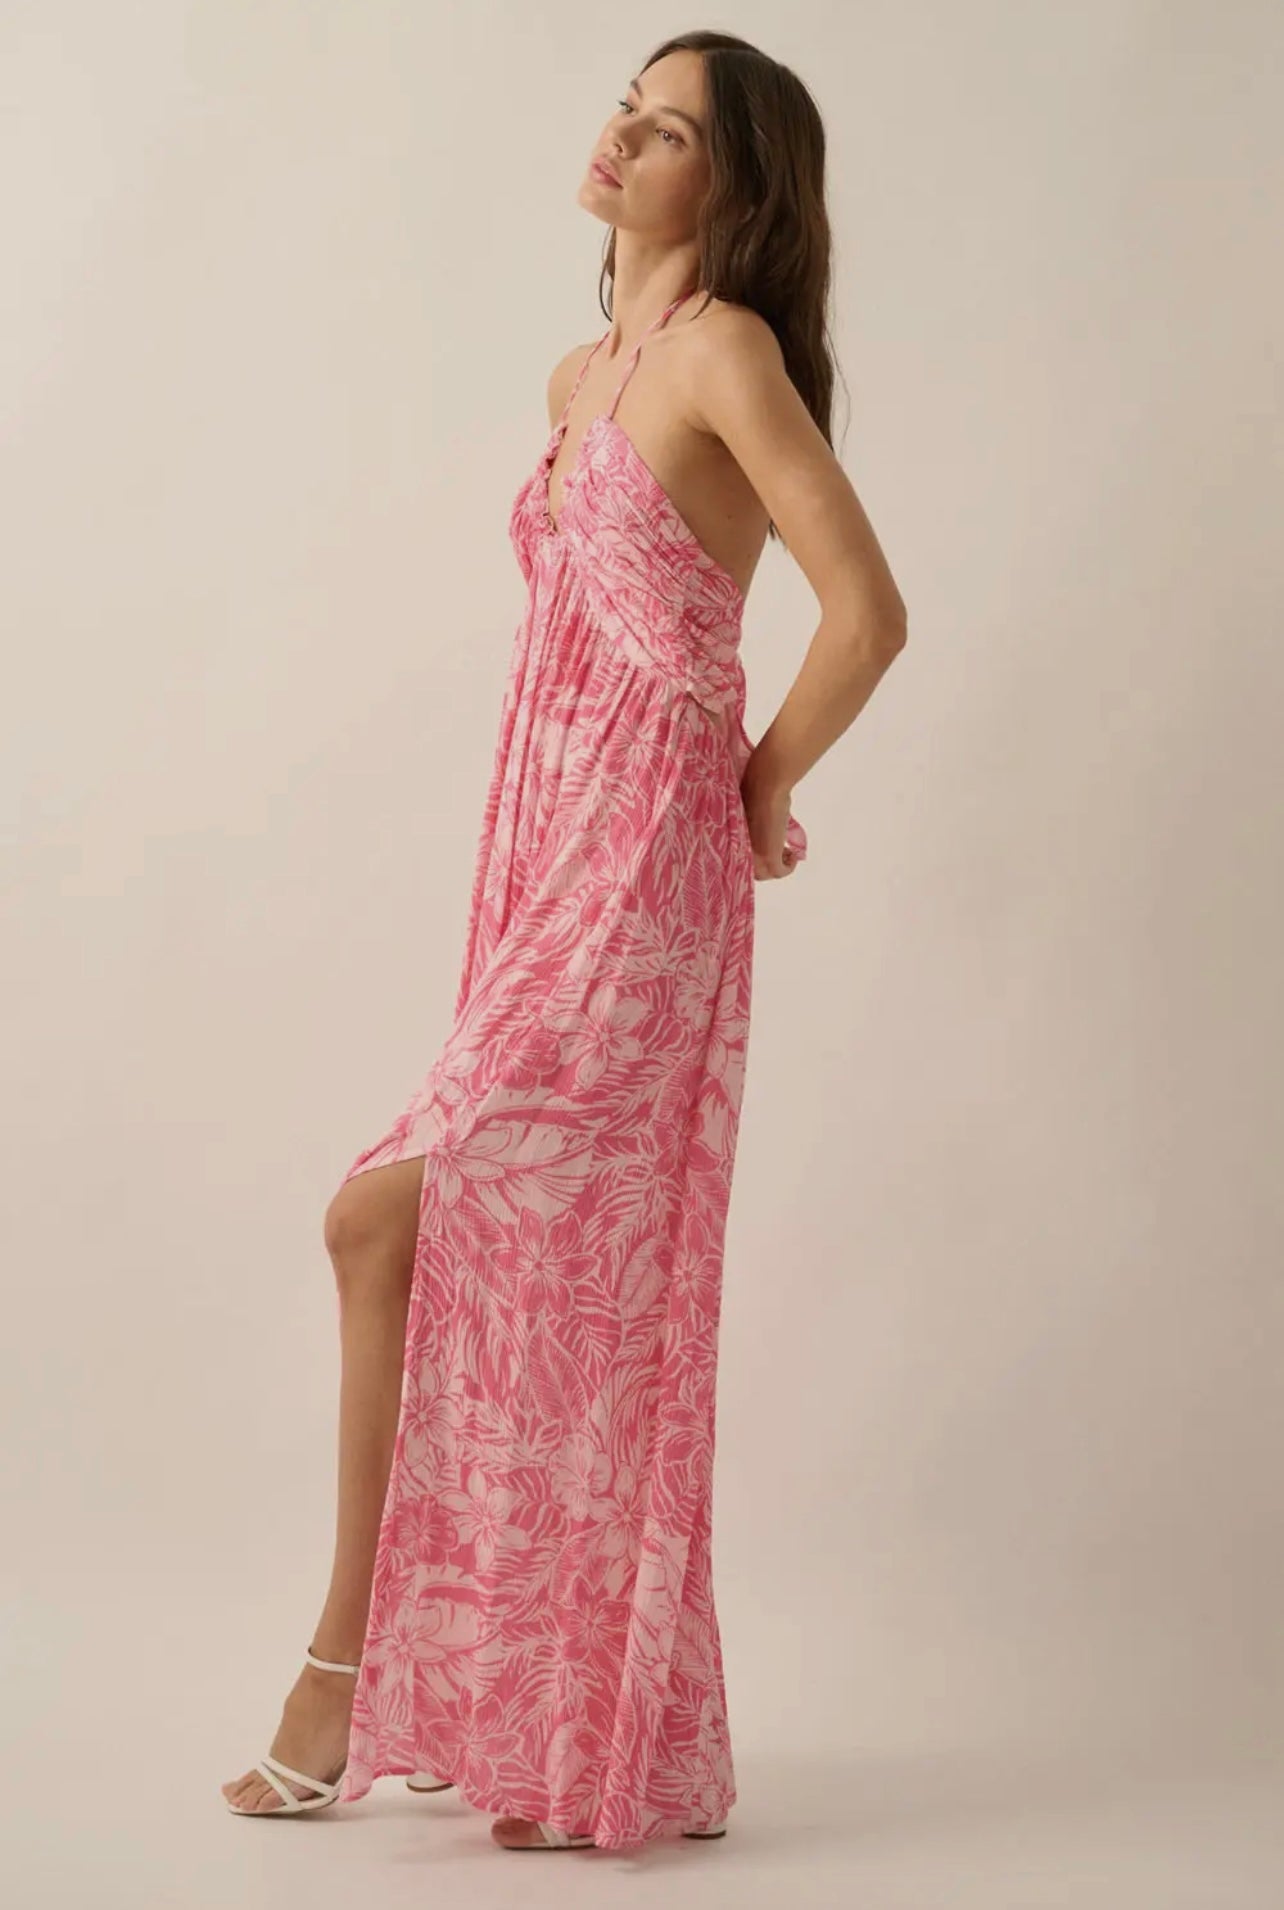 Floral Crepe Plunging-Neck Halter
Maxi Dress